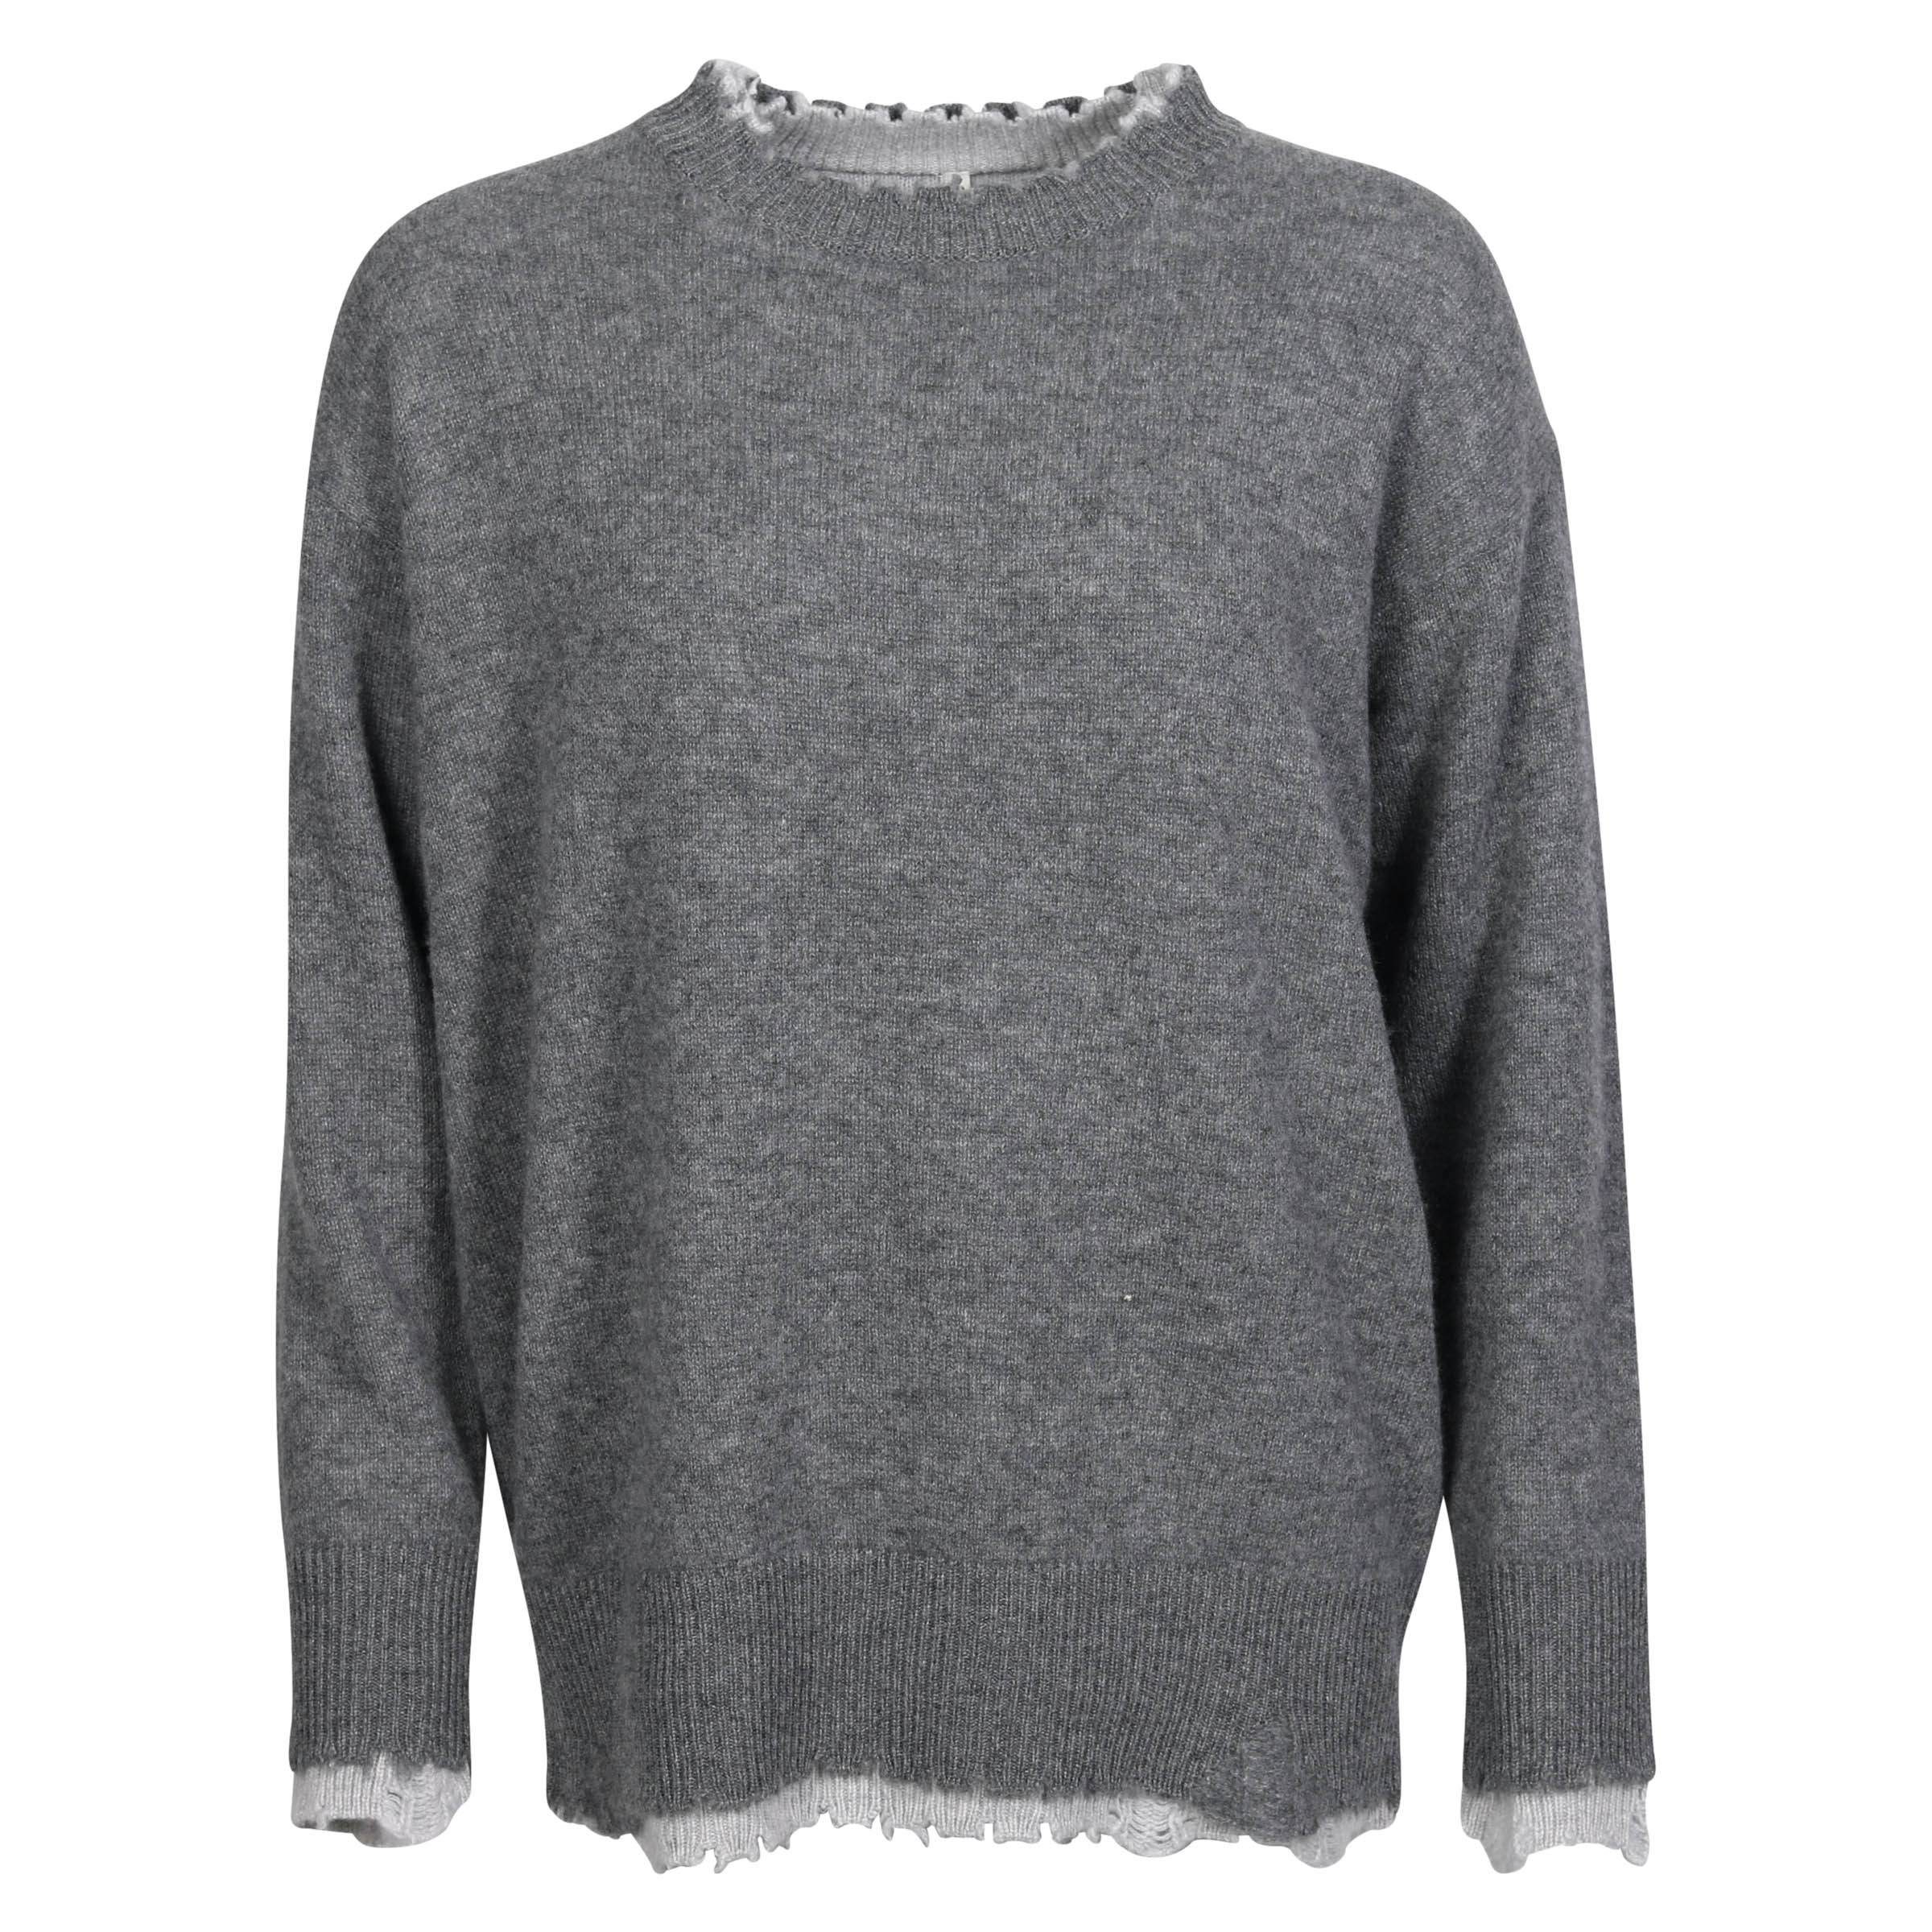 R13 Reversible Cashmere Sweater in Heathergrey XS